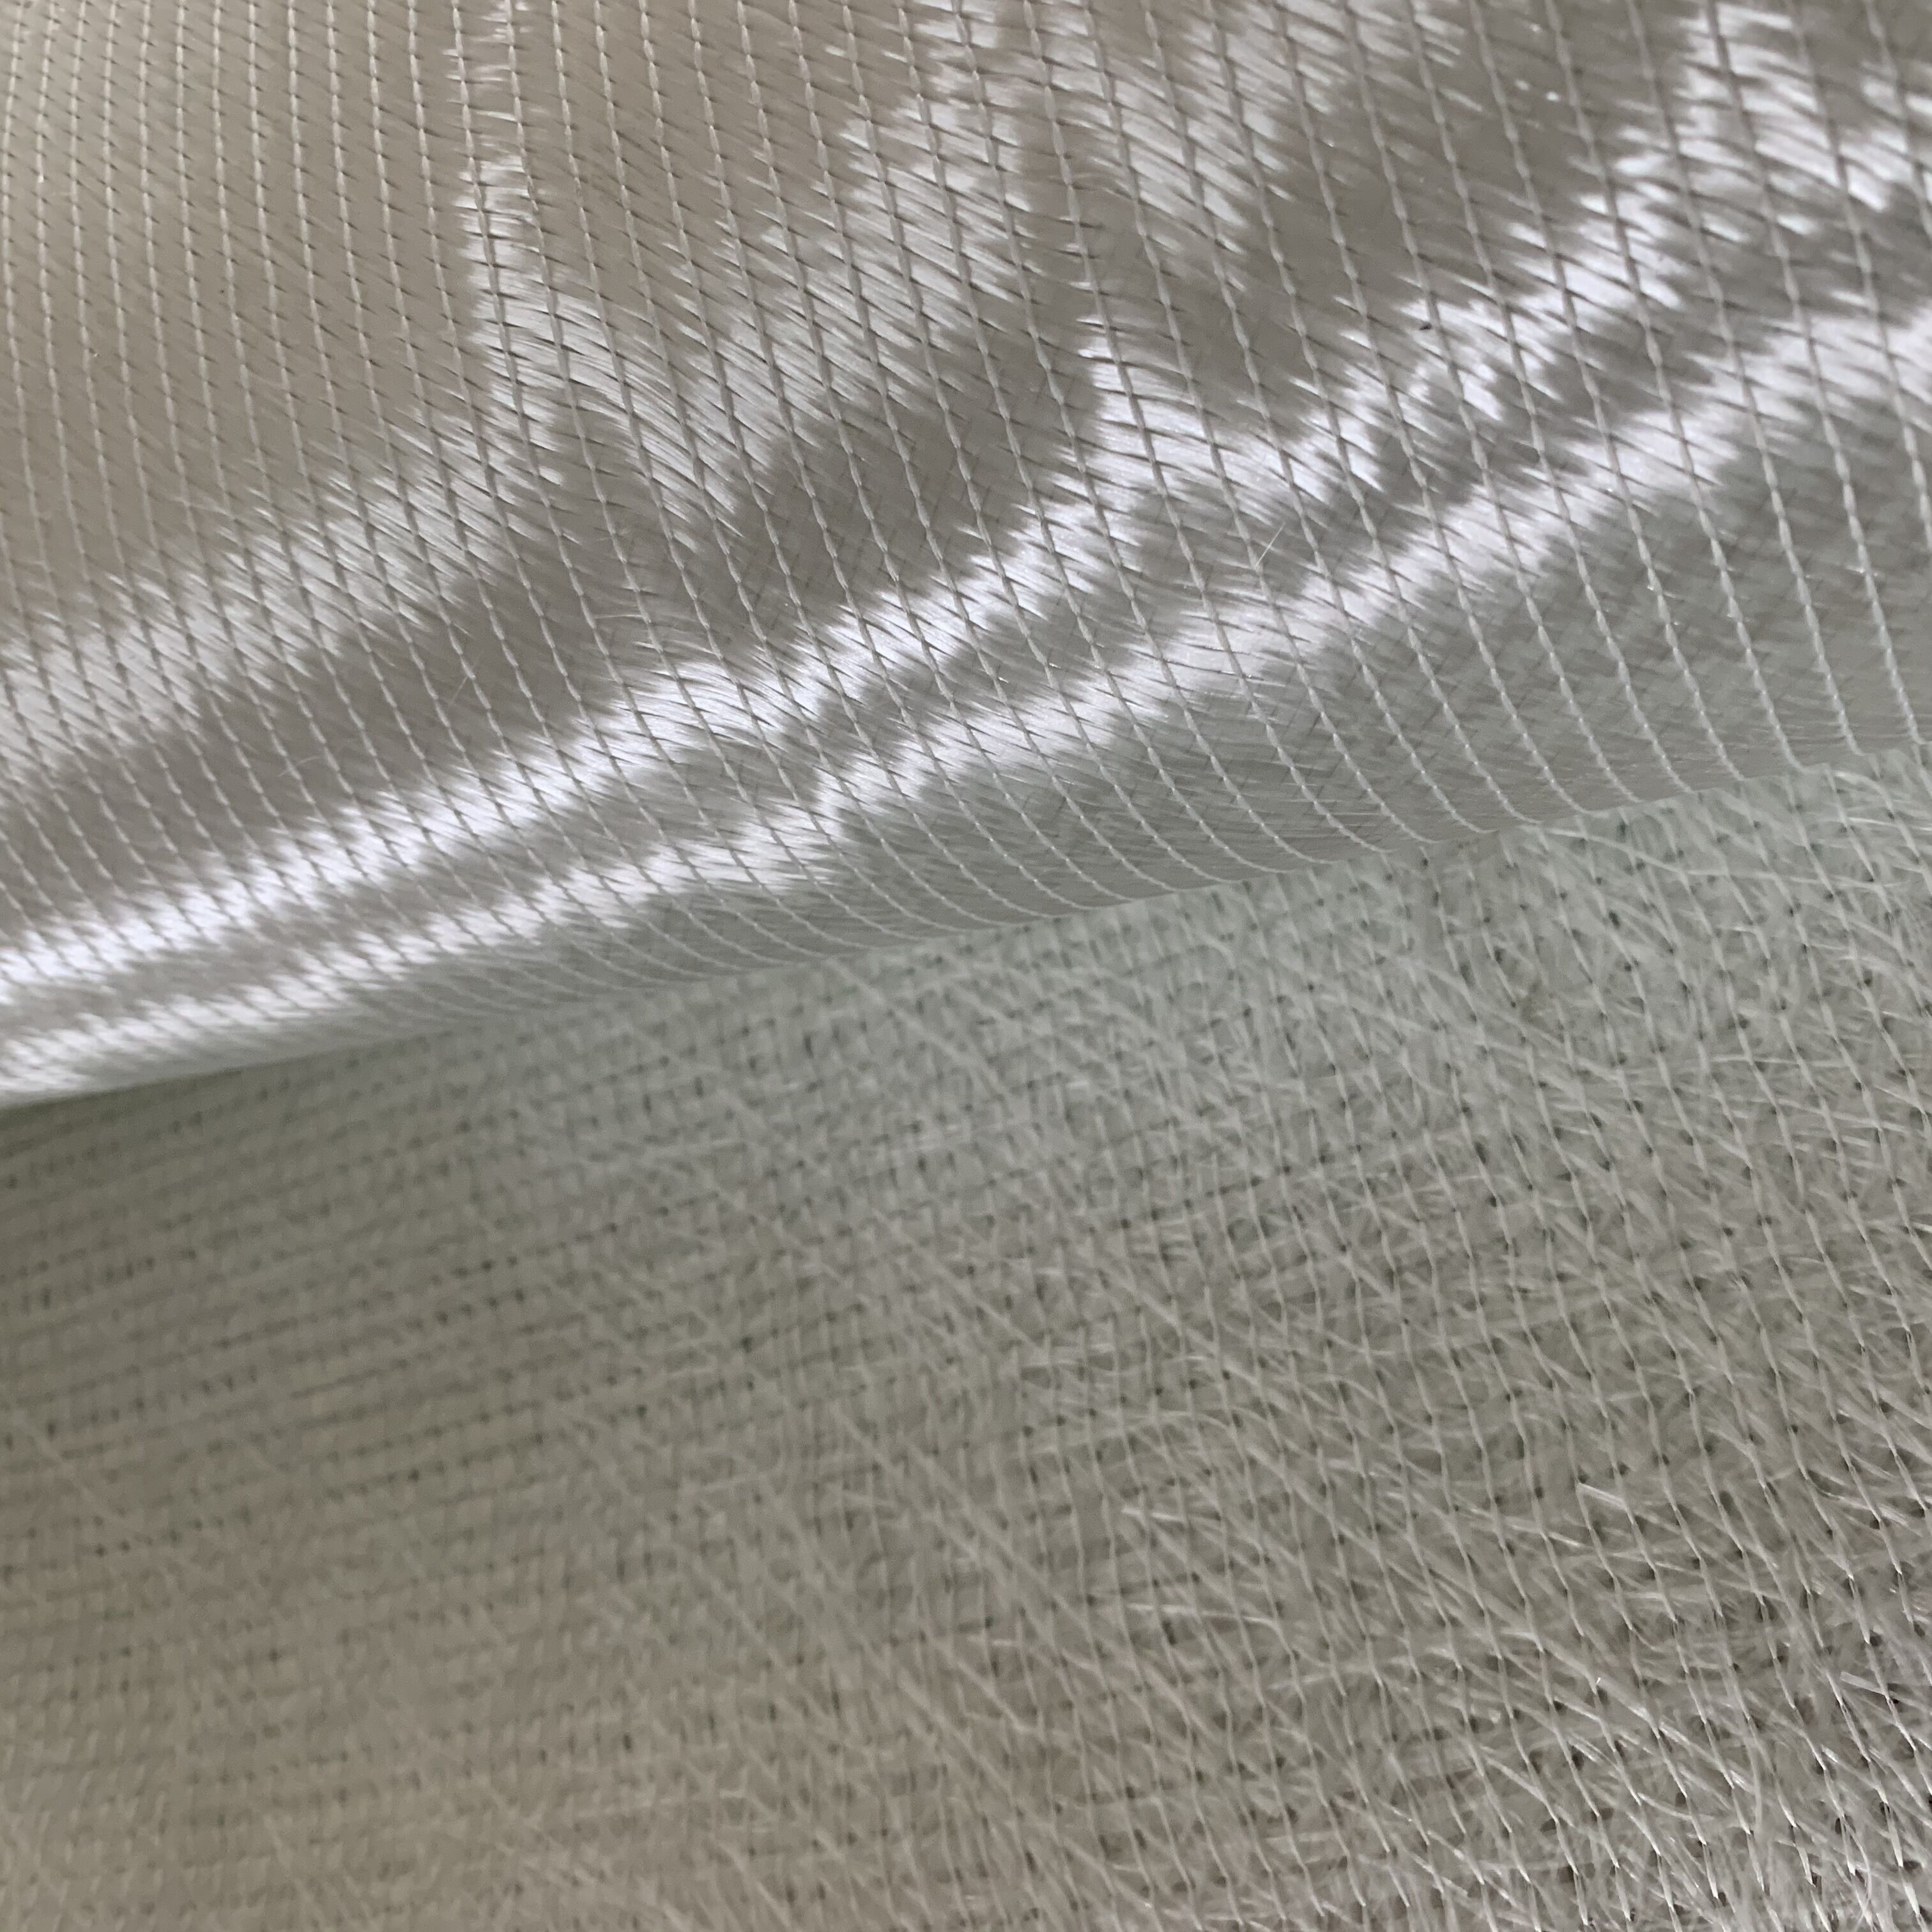 Multiaxial fiberglass fabric for wind turbine blade